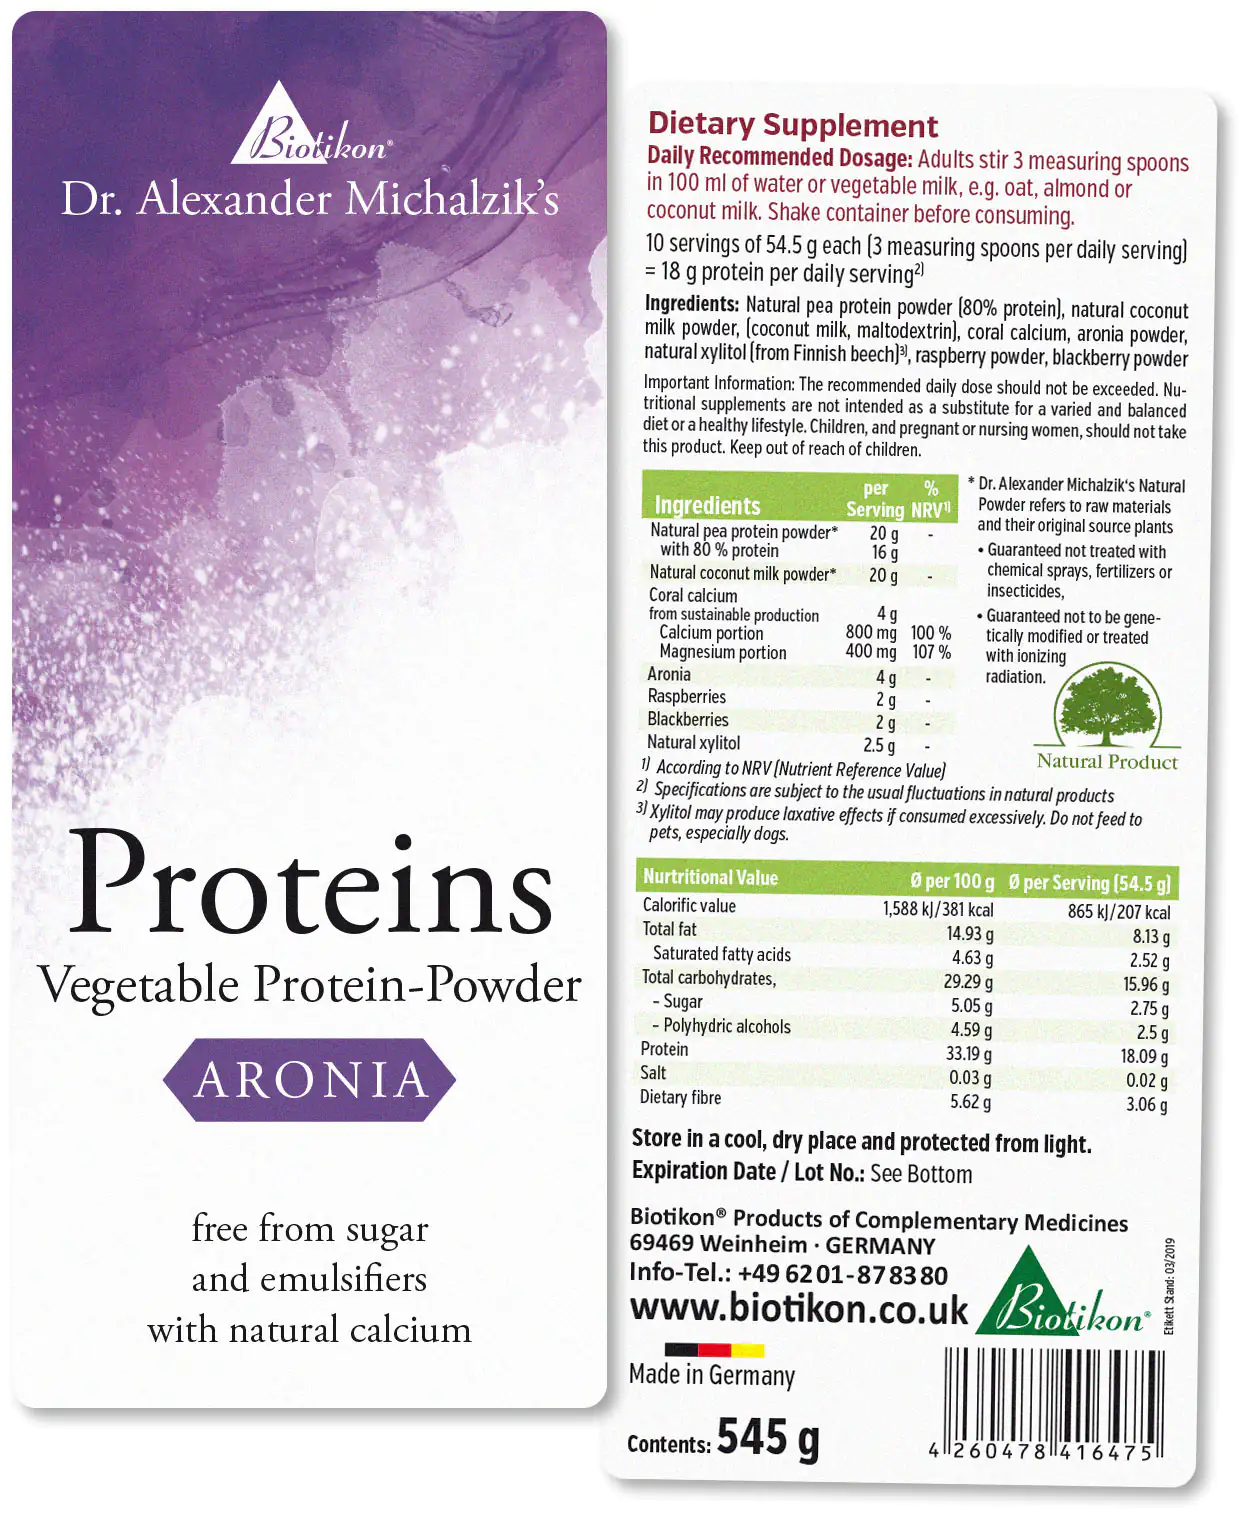 Proteine - 3er-Pack, Aronia